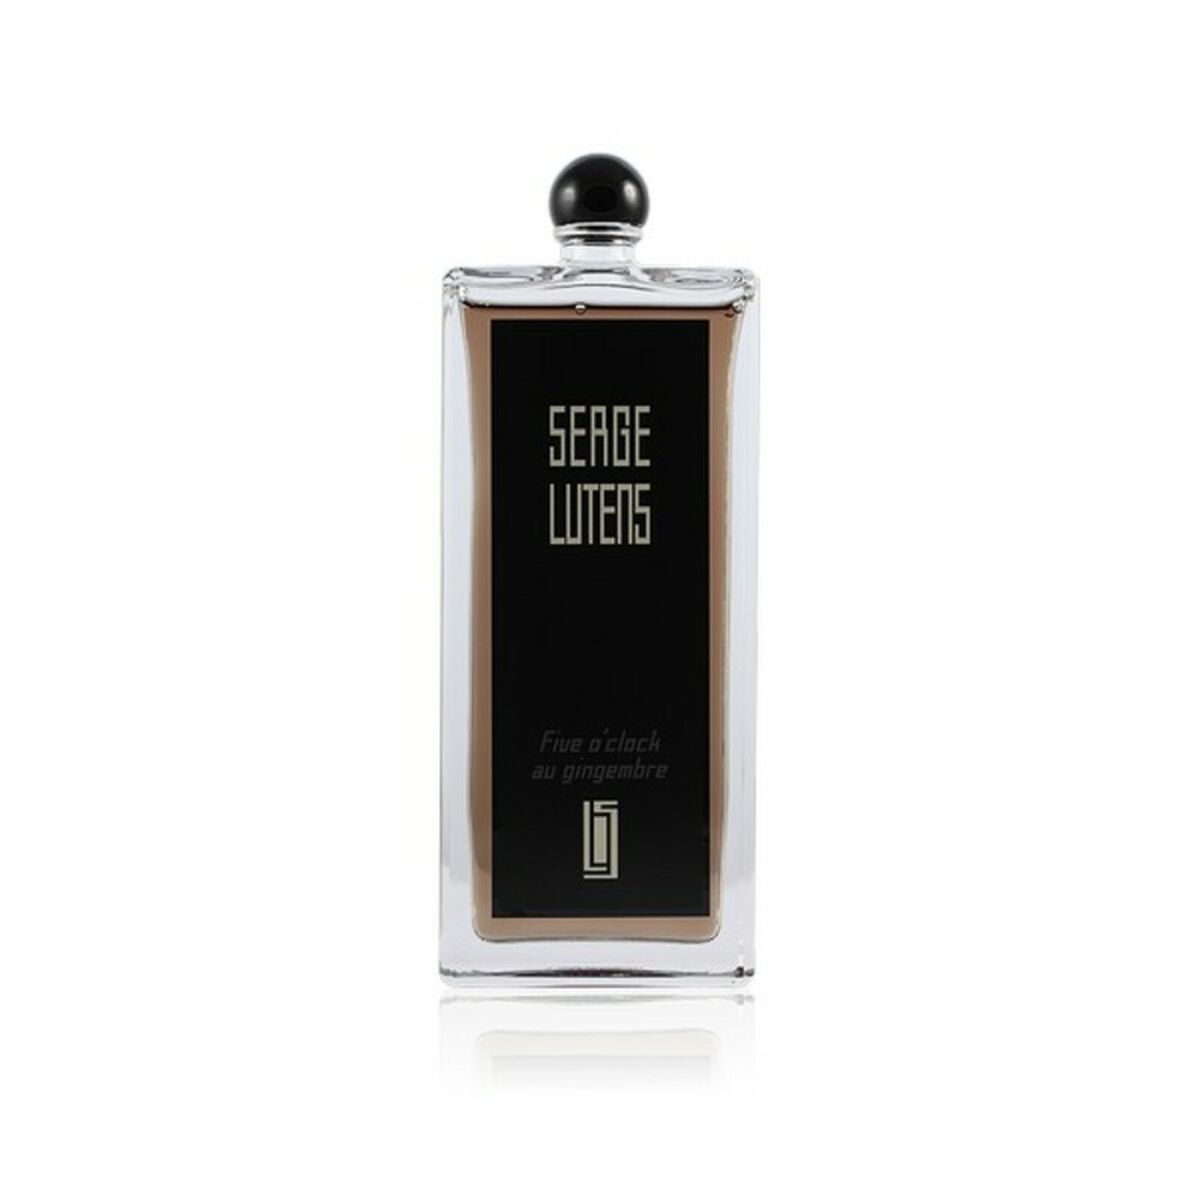 Parfum Mixte Five O'Clock Au Gingembre Serge Lutens 3700358123624 (100 ml) 100 ml - Serge Lutens - Jardin D'Eyden - jardindeyden.fr